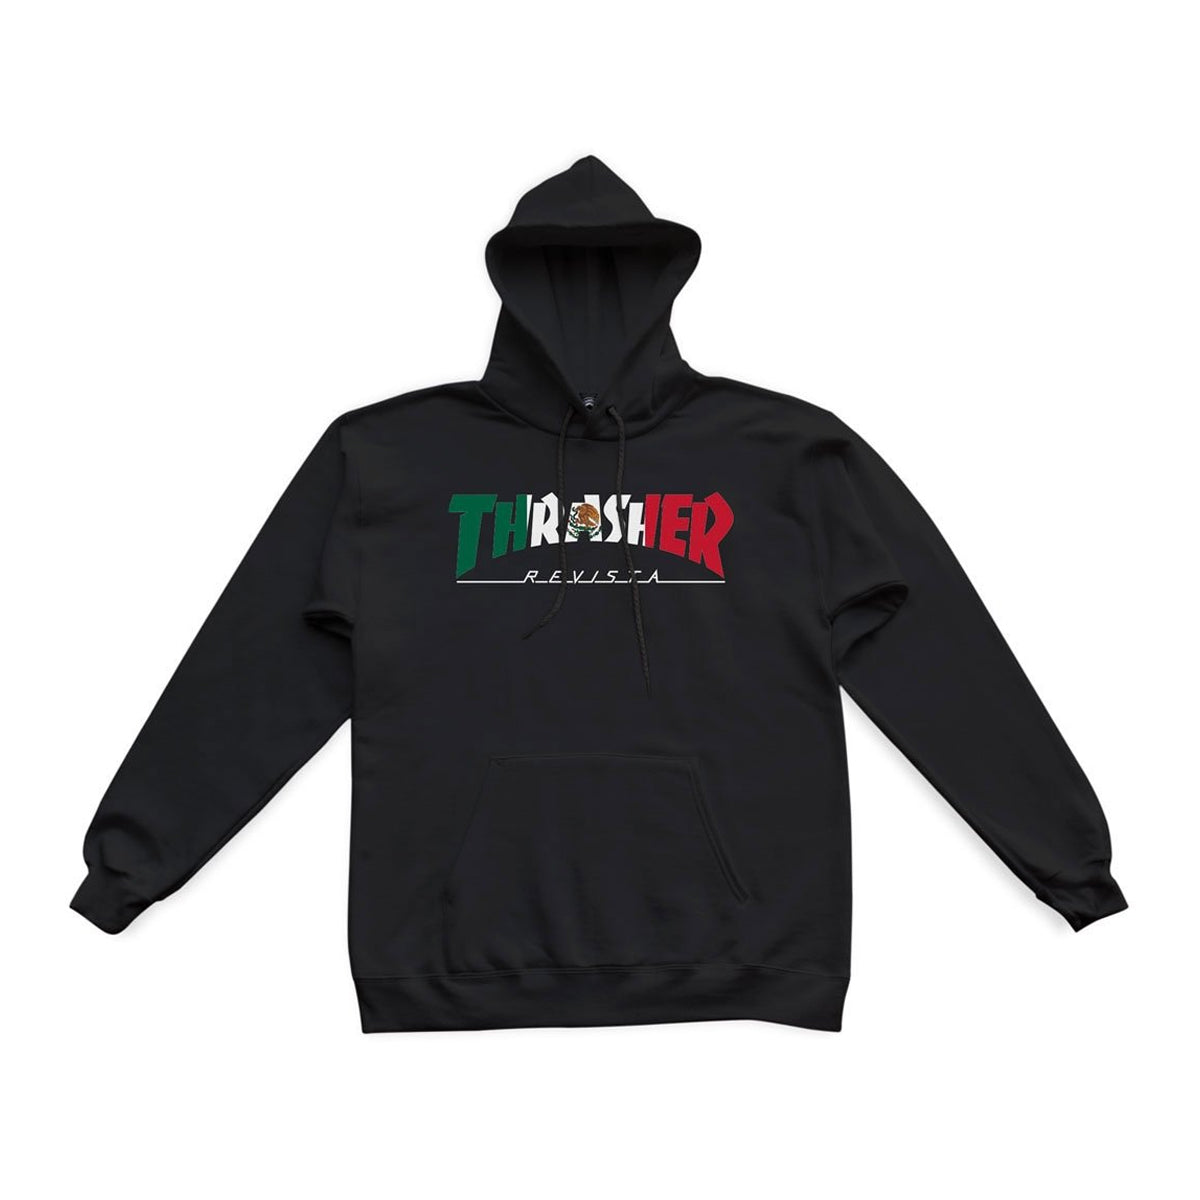 Thrasher Mexico Revista Hooded Sweatshirt (Black) - Apple Valley Emporium